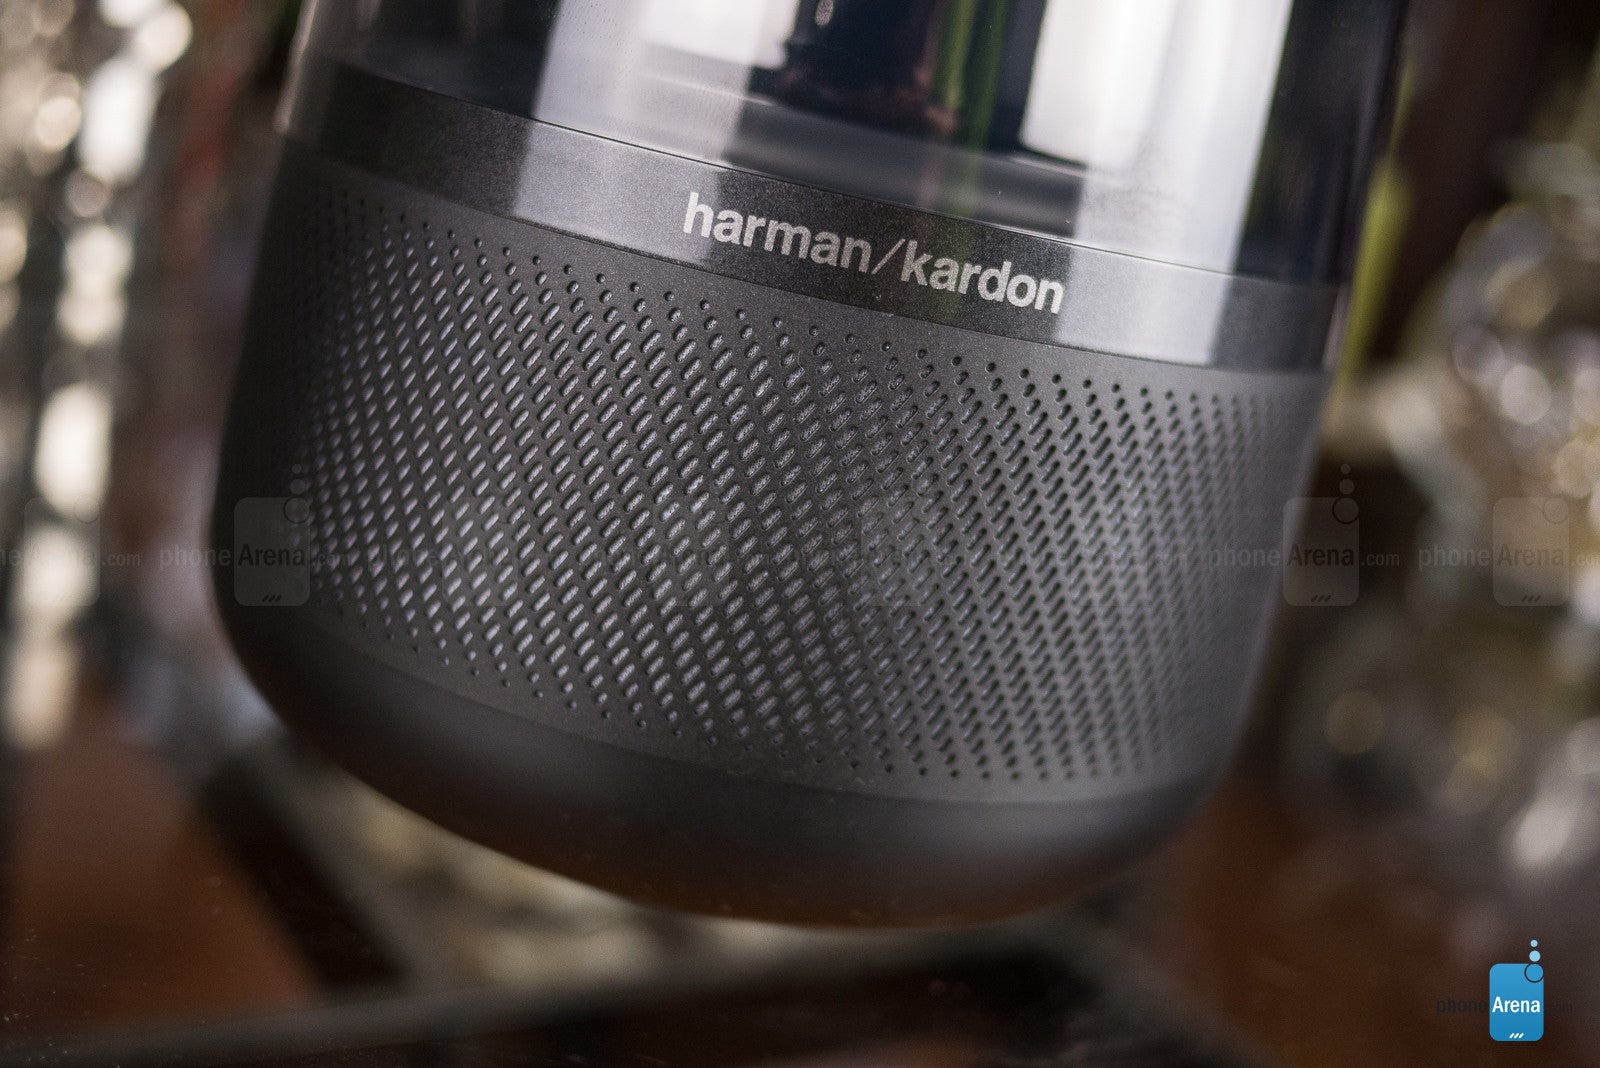 Harman Kardon Allure smart speaker Review